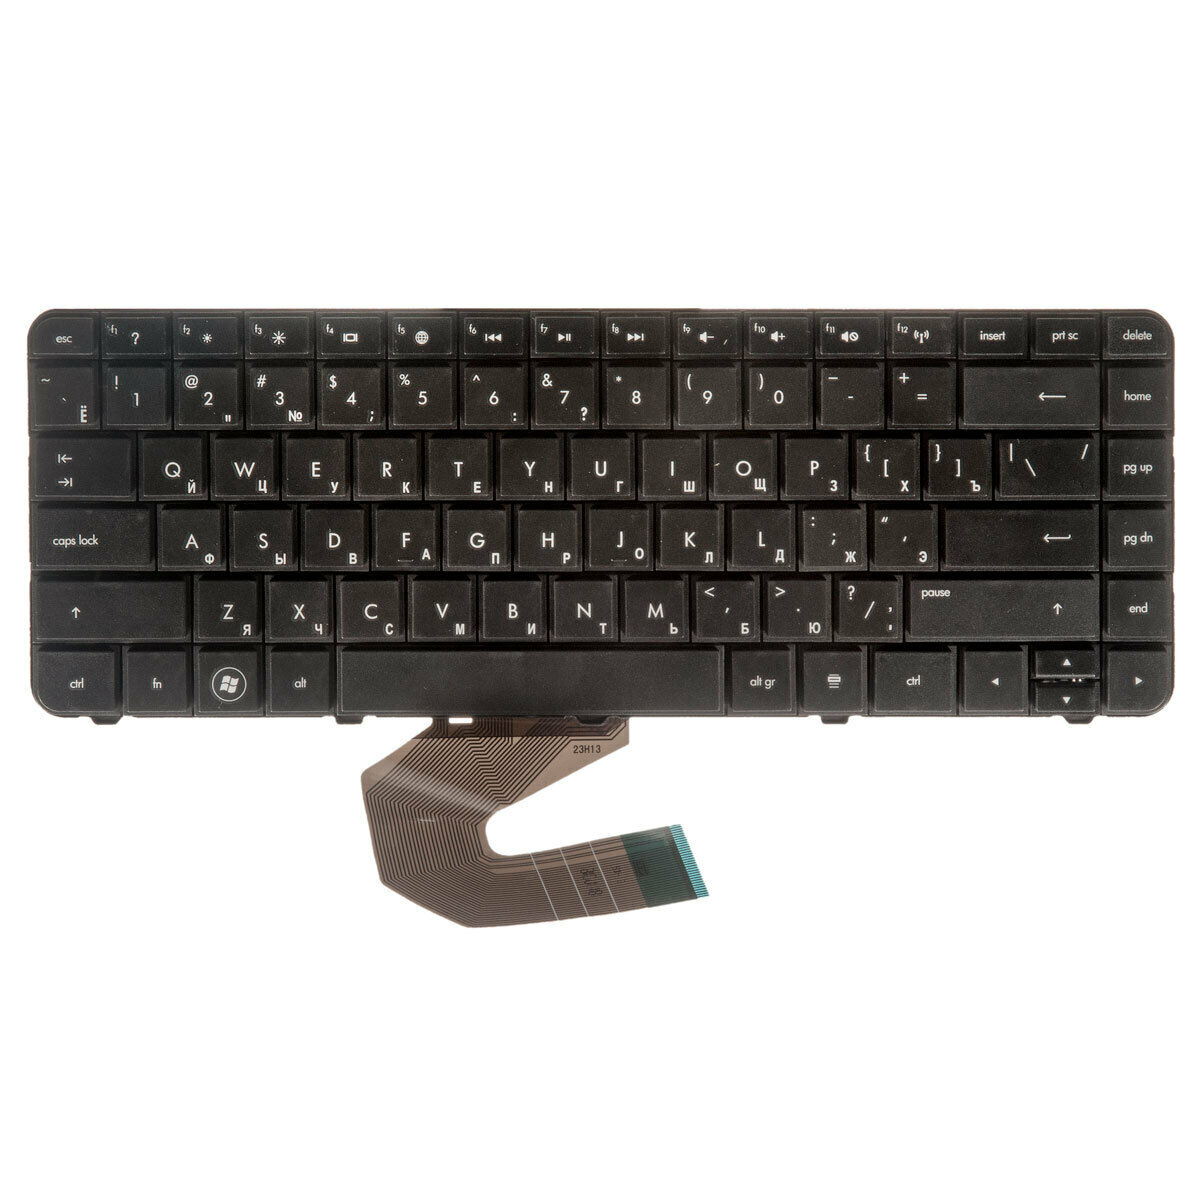 Клавиатура для HP для Pavilion g4-1000 g6-1000 g6-1002er g6-1003er g6-1004er g6-1053er g6-1109er g6-1162er g6-1210er g6-1257er g6-1258er